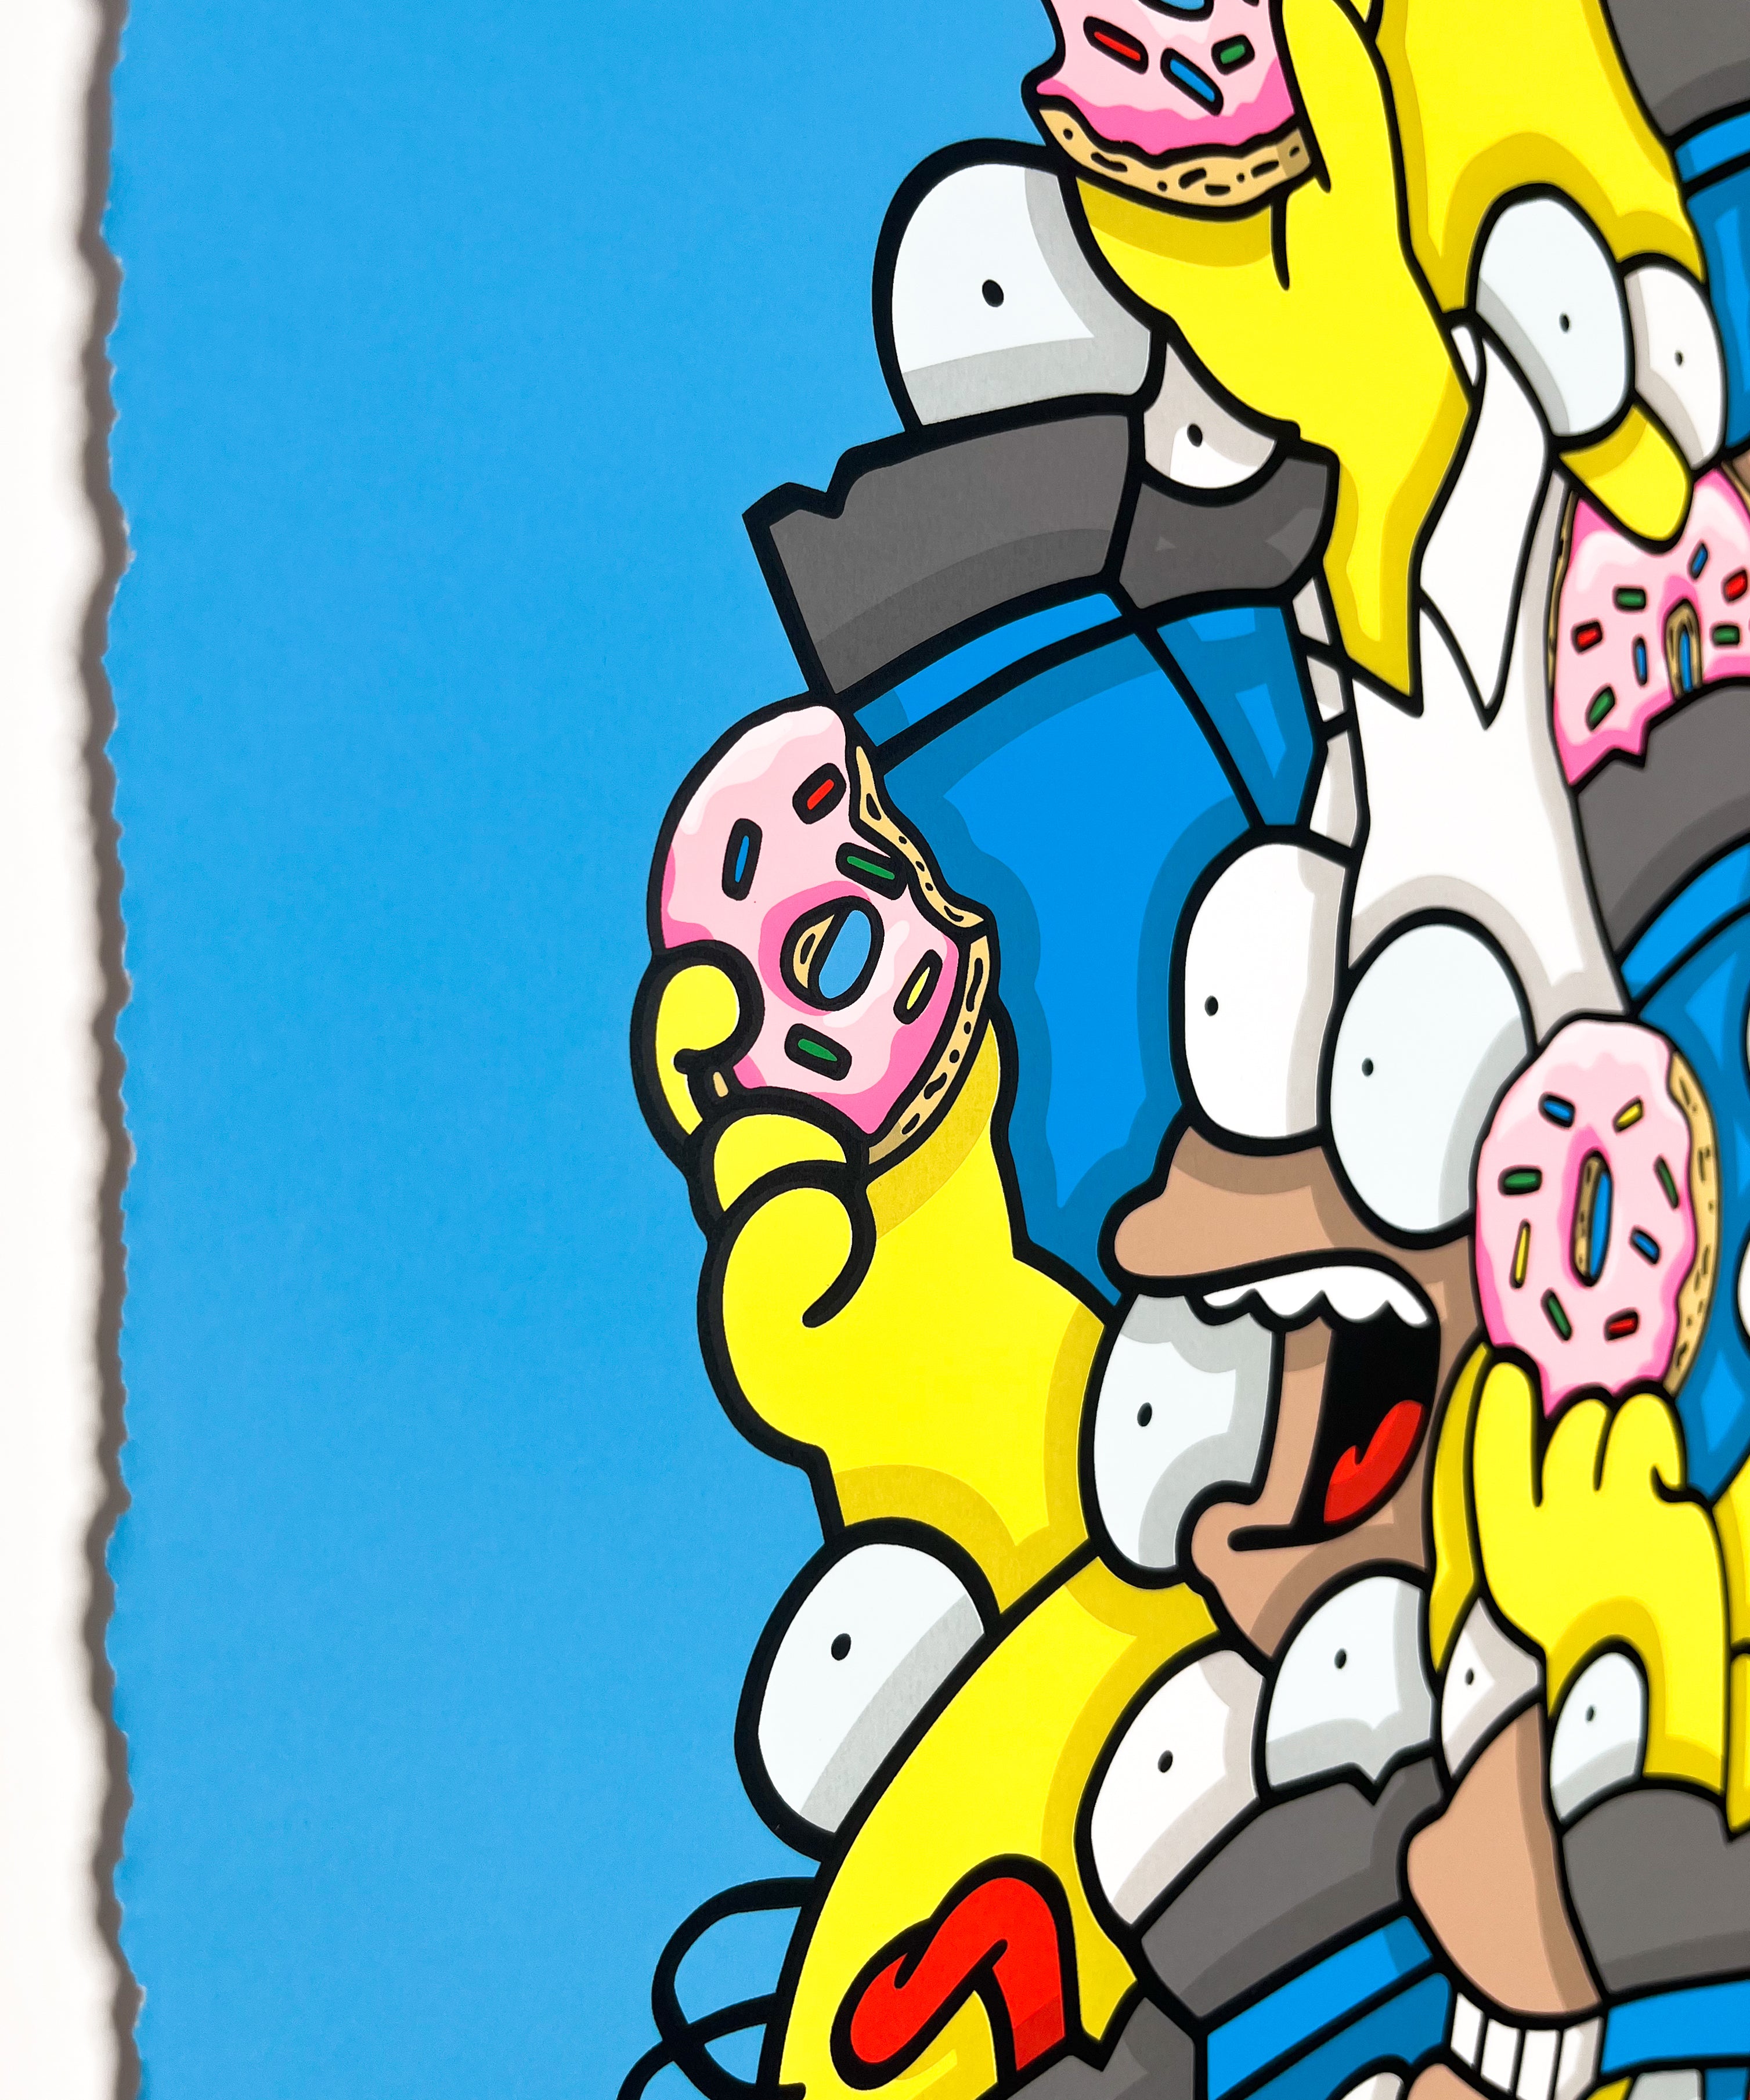 "Donut Man" by Wizard $kull